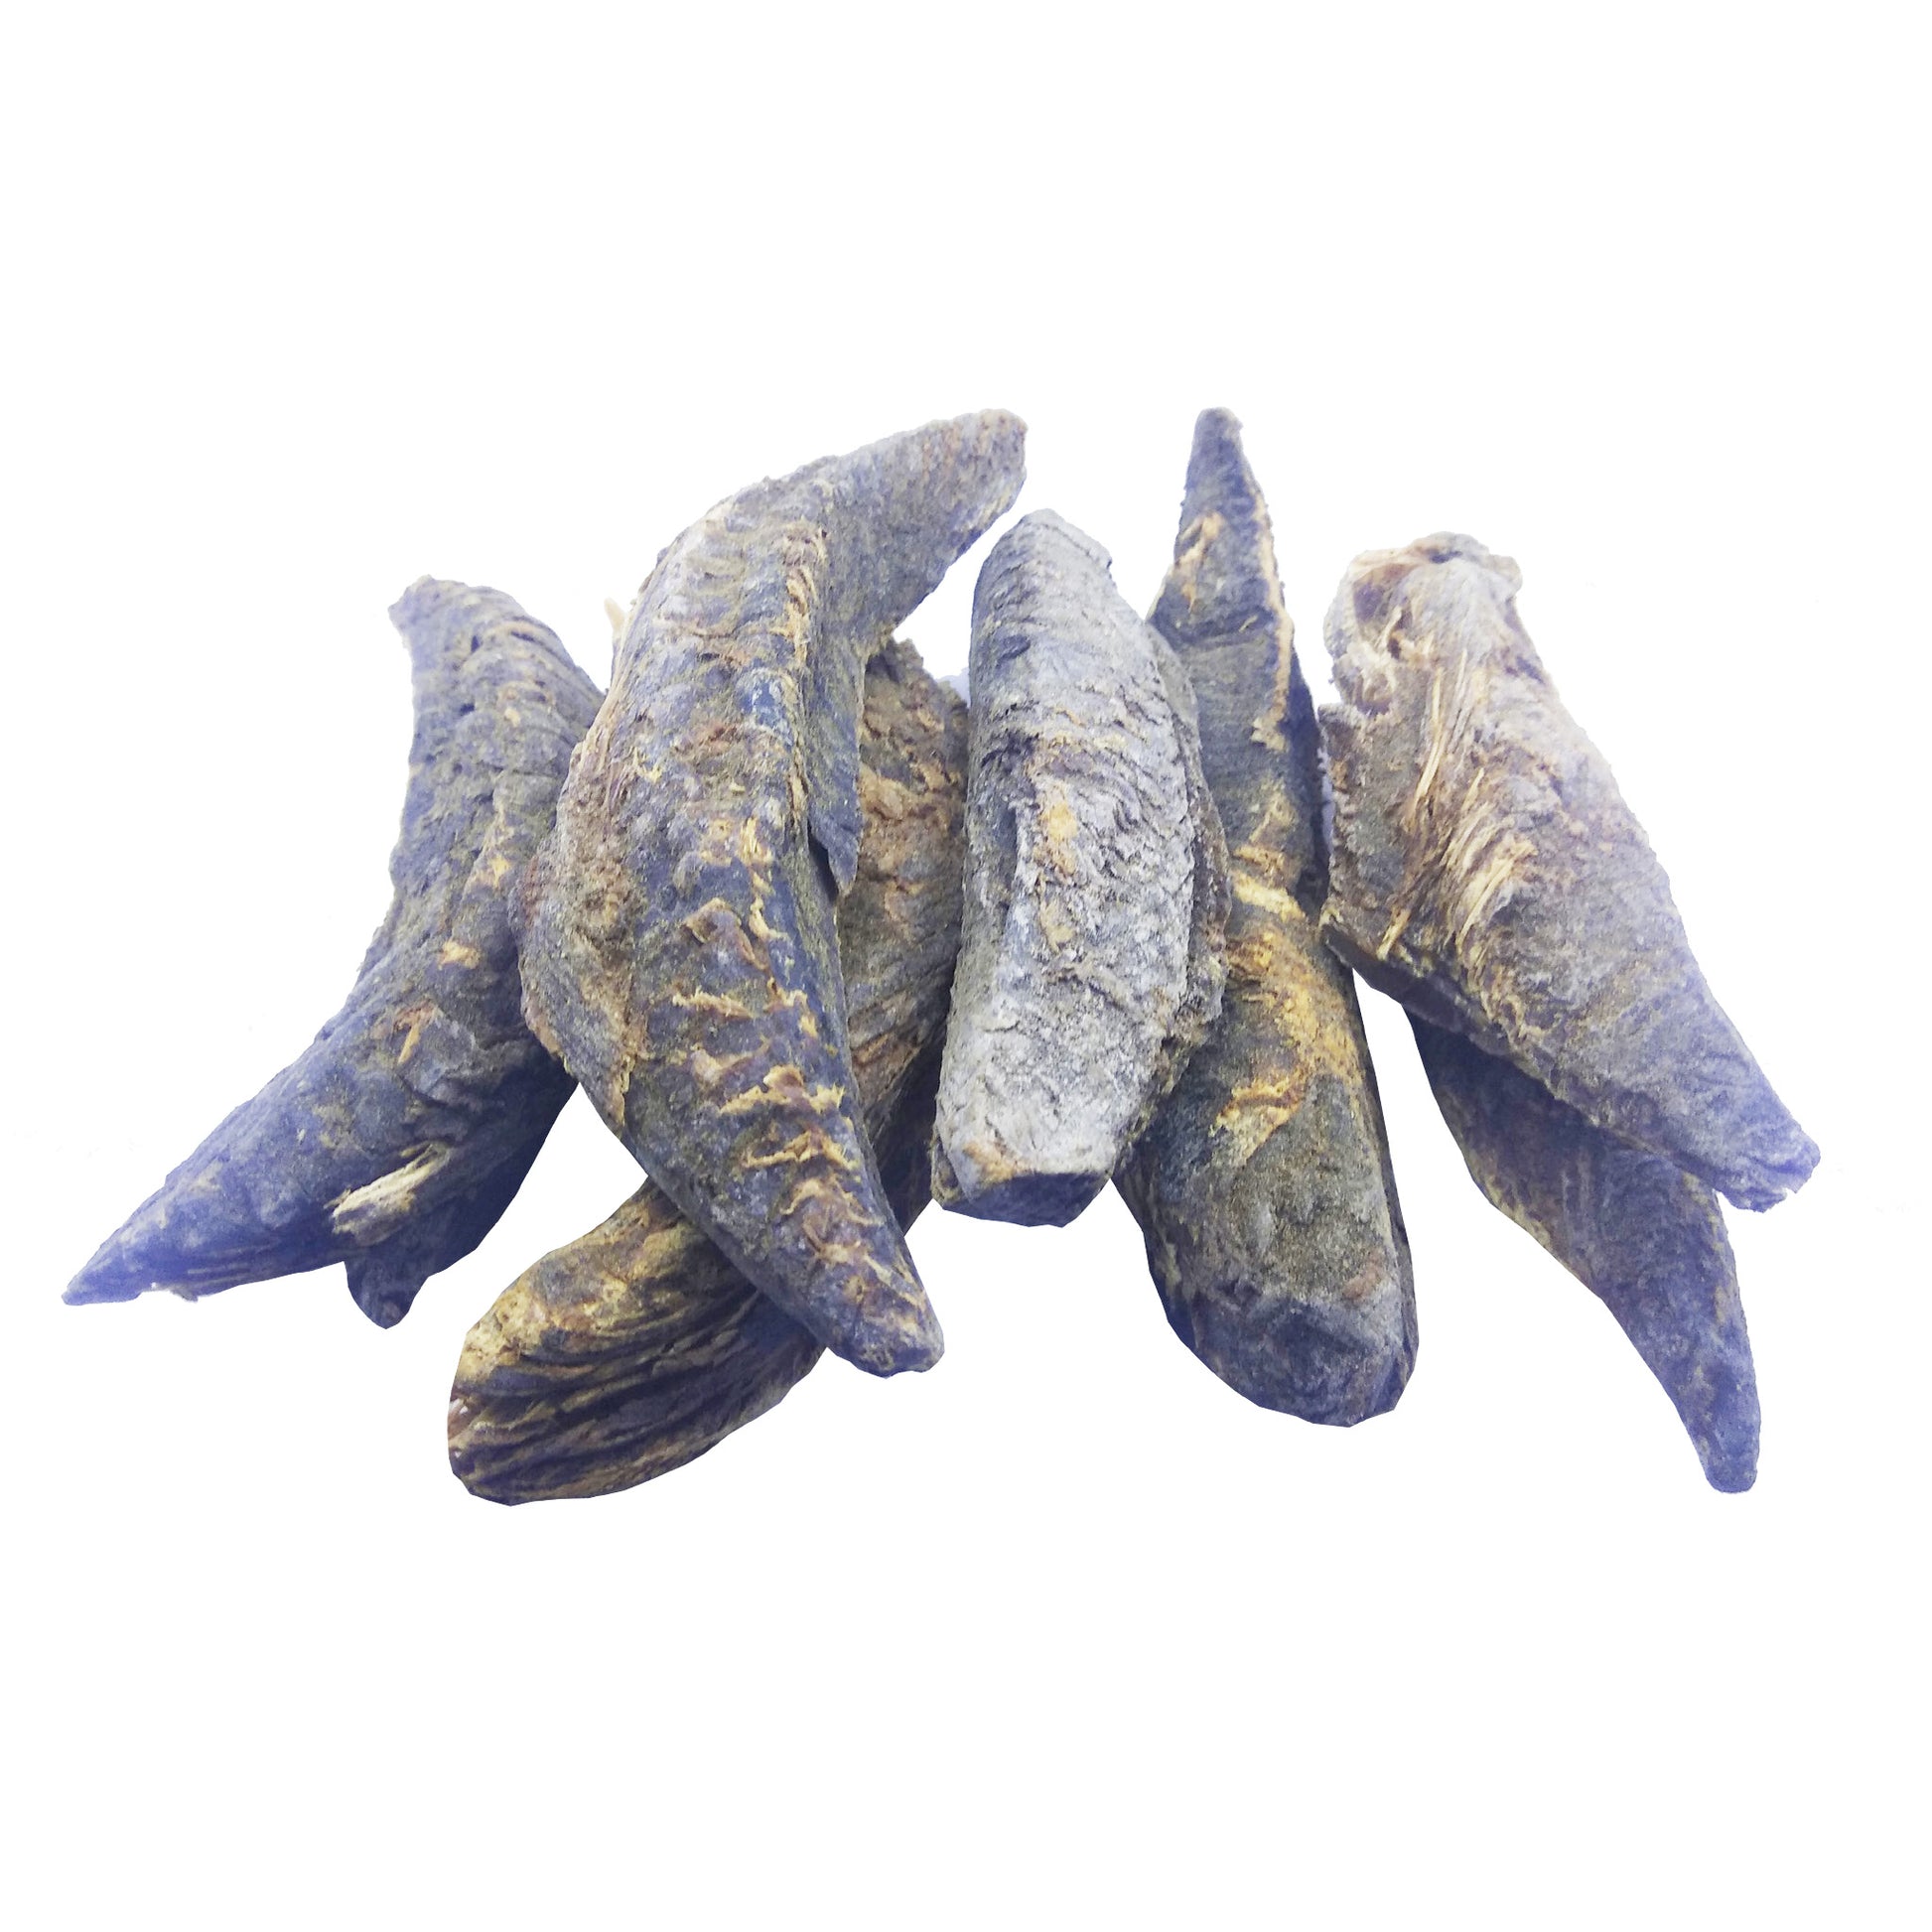 Export Quality Dry Maasi Fish/Maasi Karuvaadu/Tuna Dry Fish/Maldive Dry Fish - Faritha